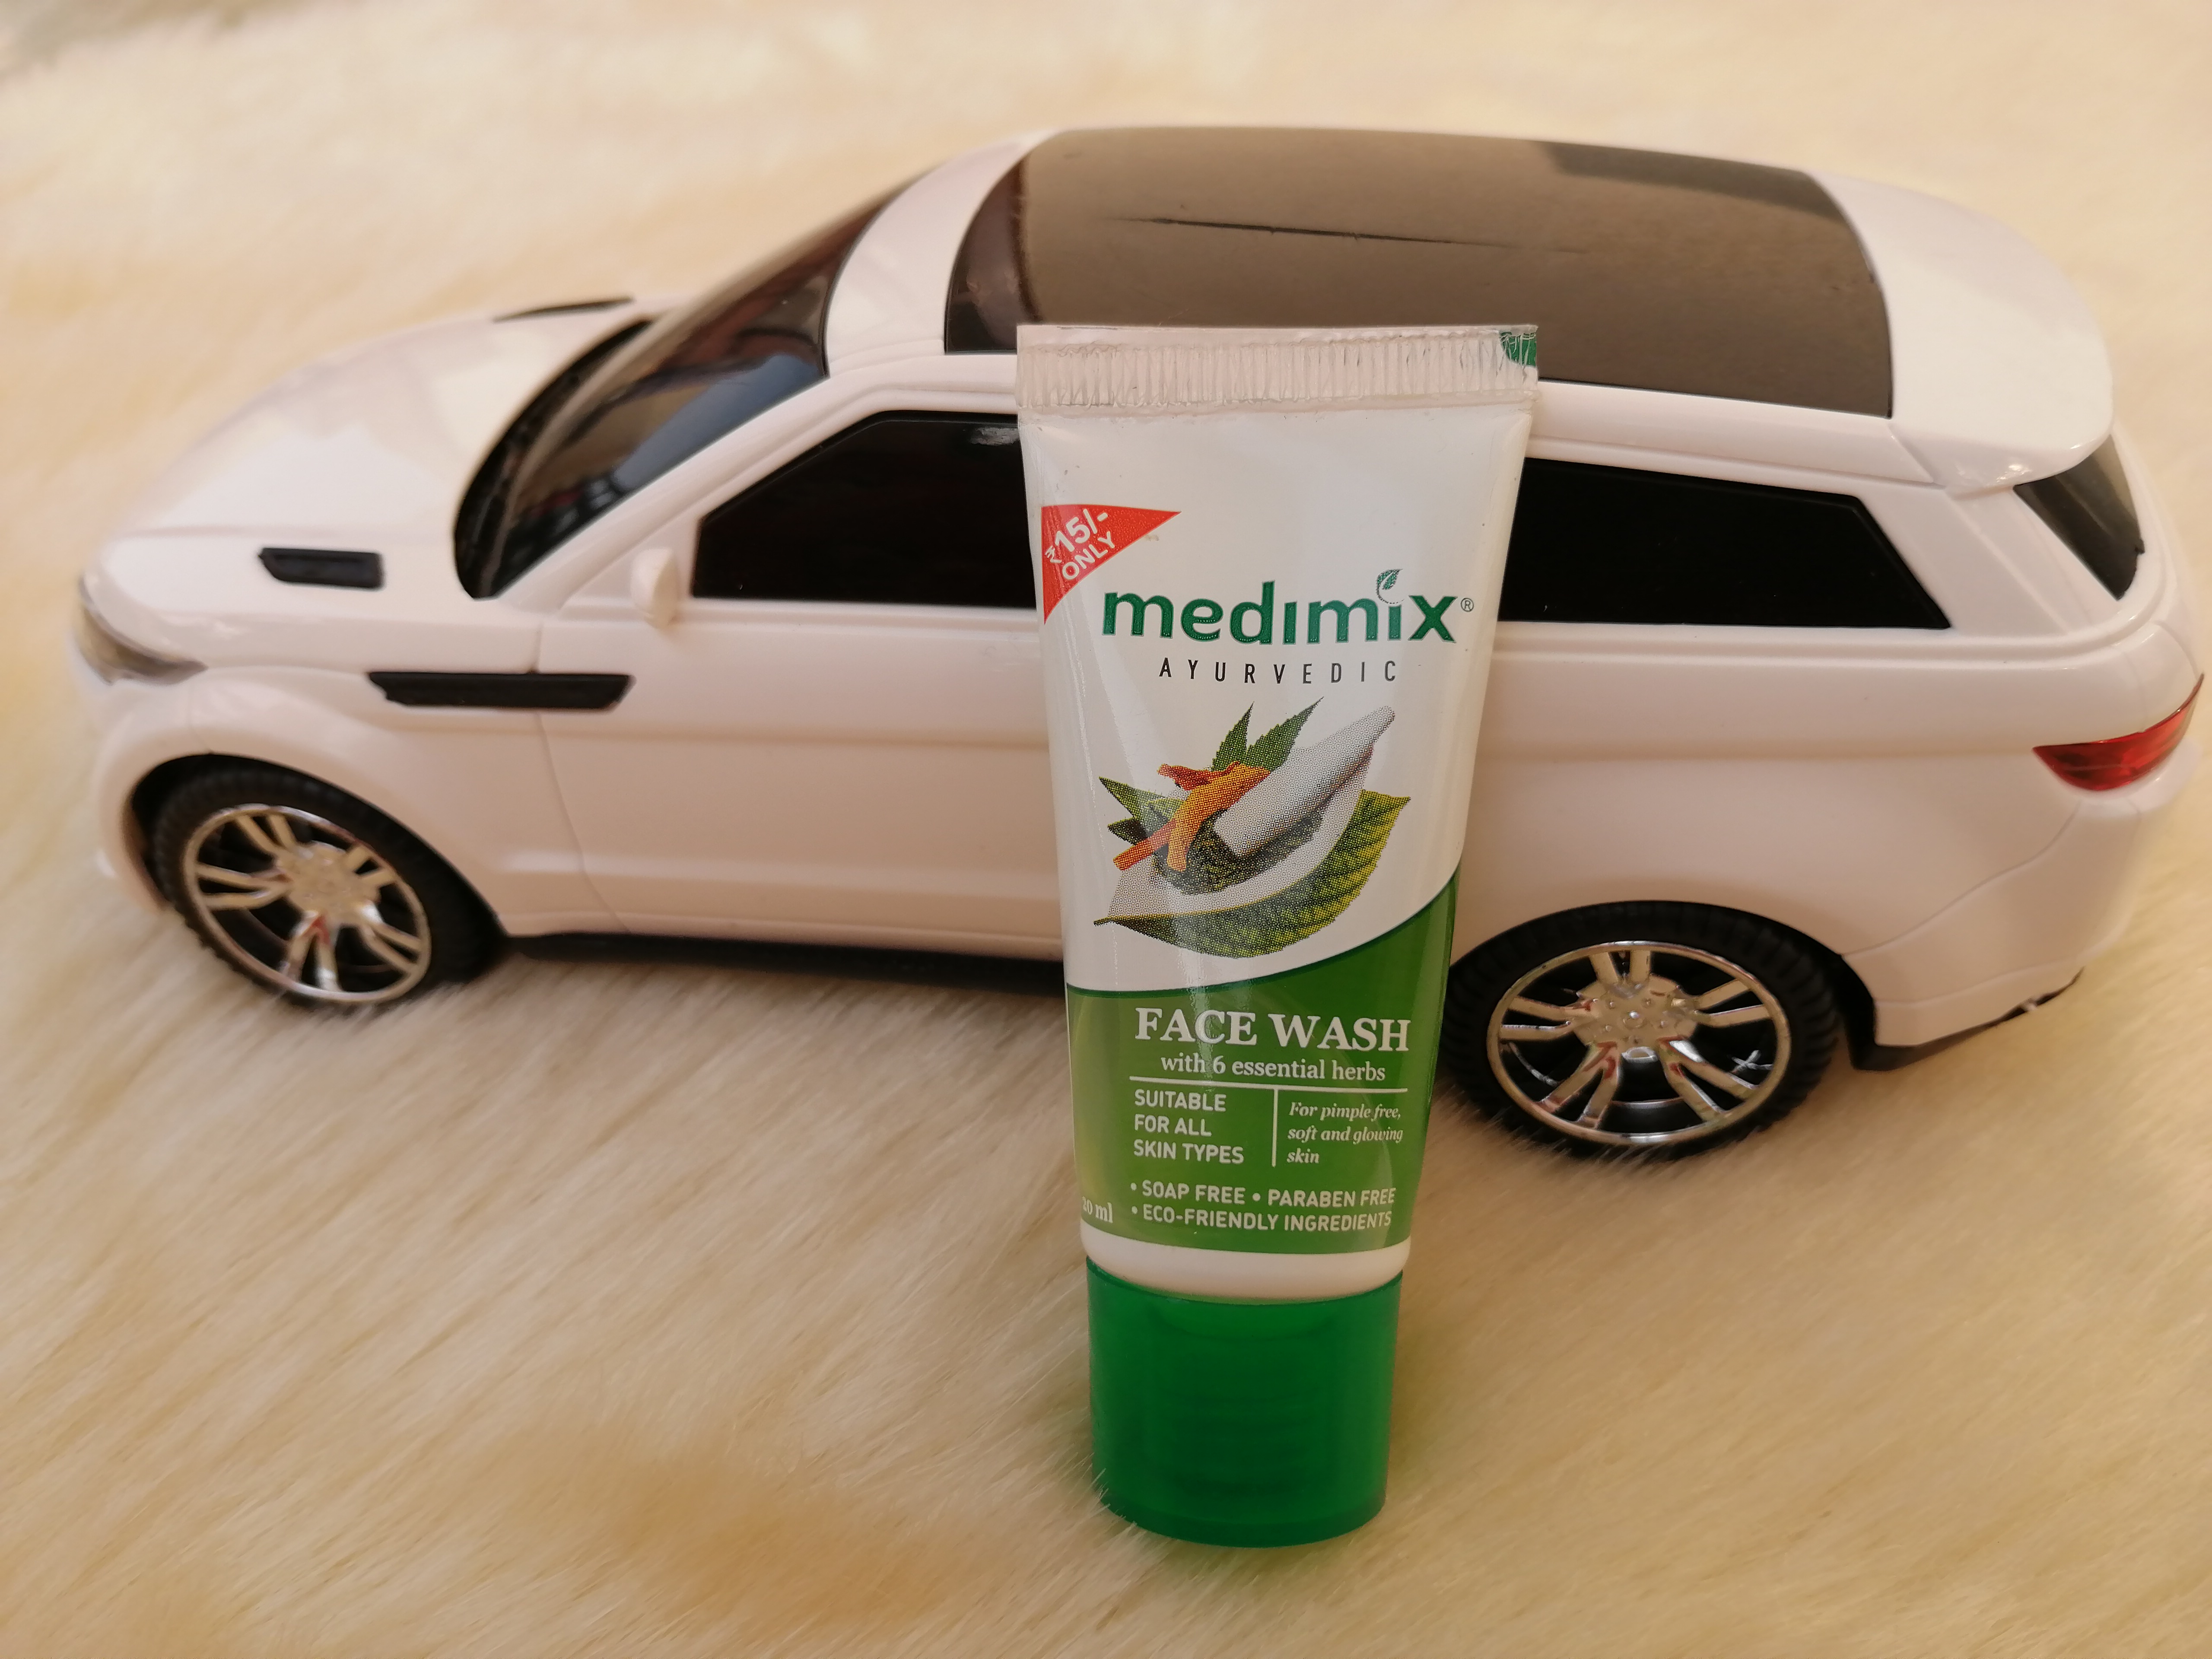 Medimix Ayurvedic Face Wash| Review